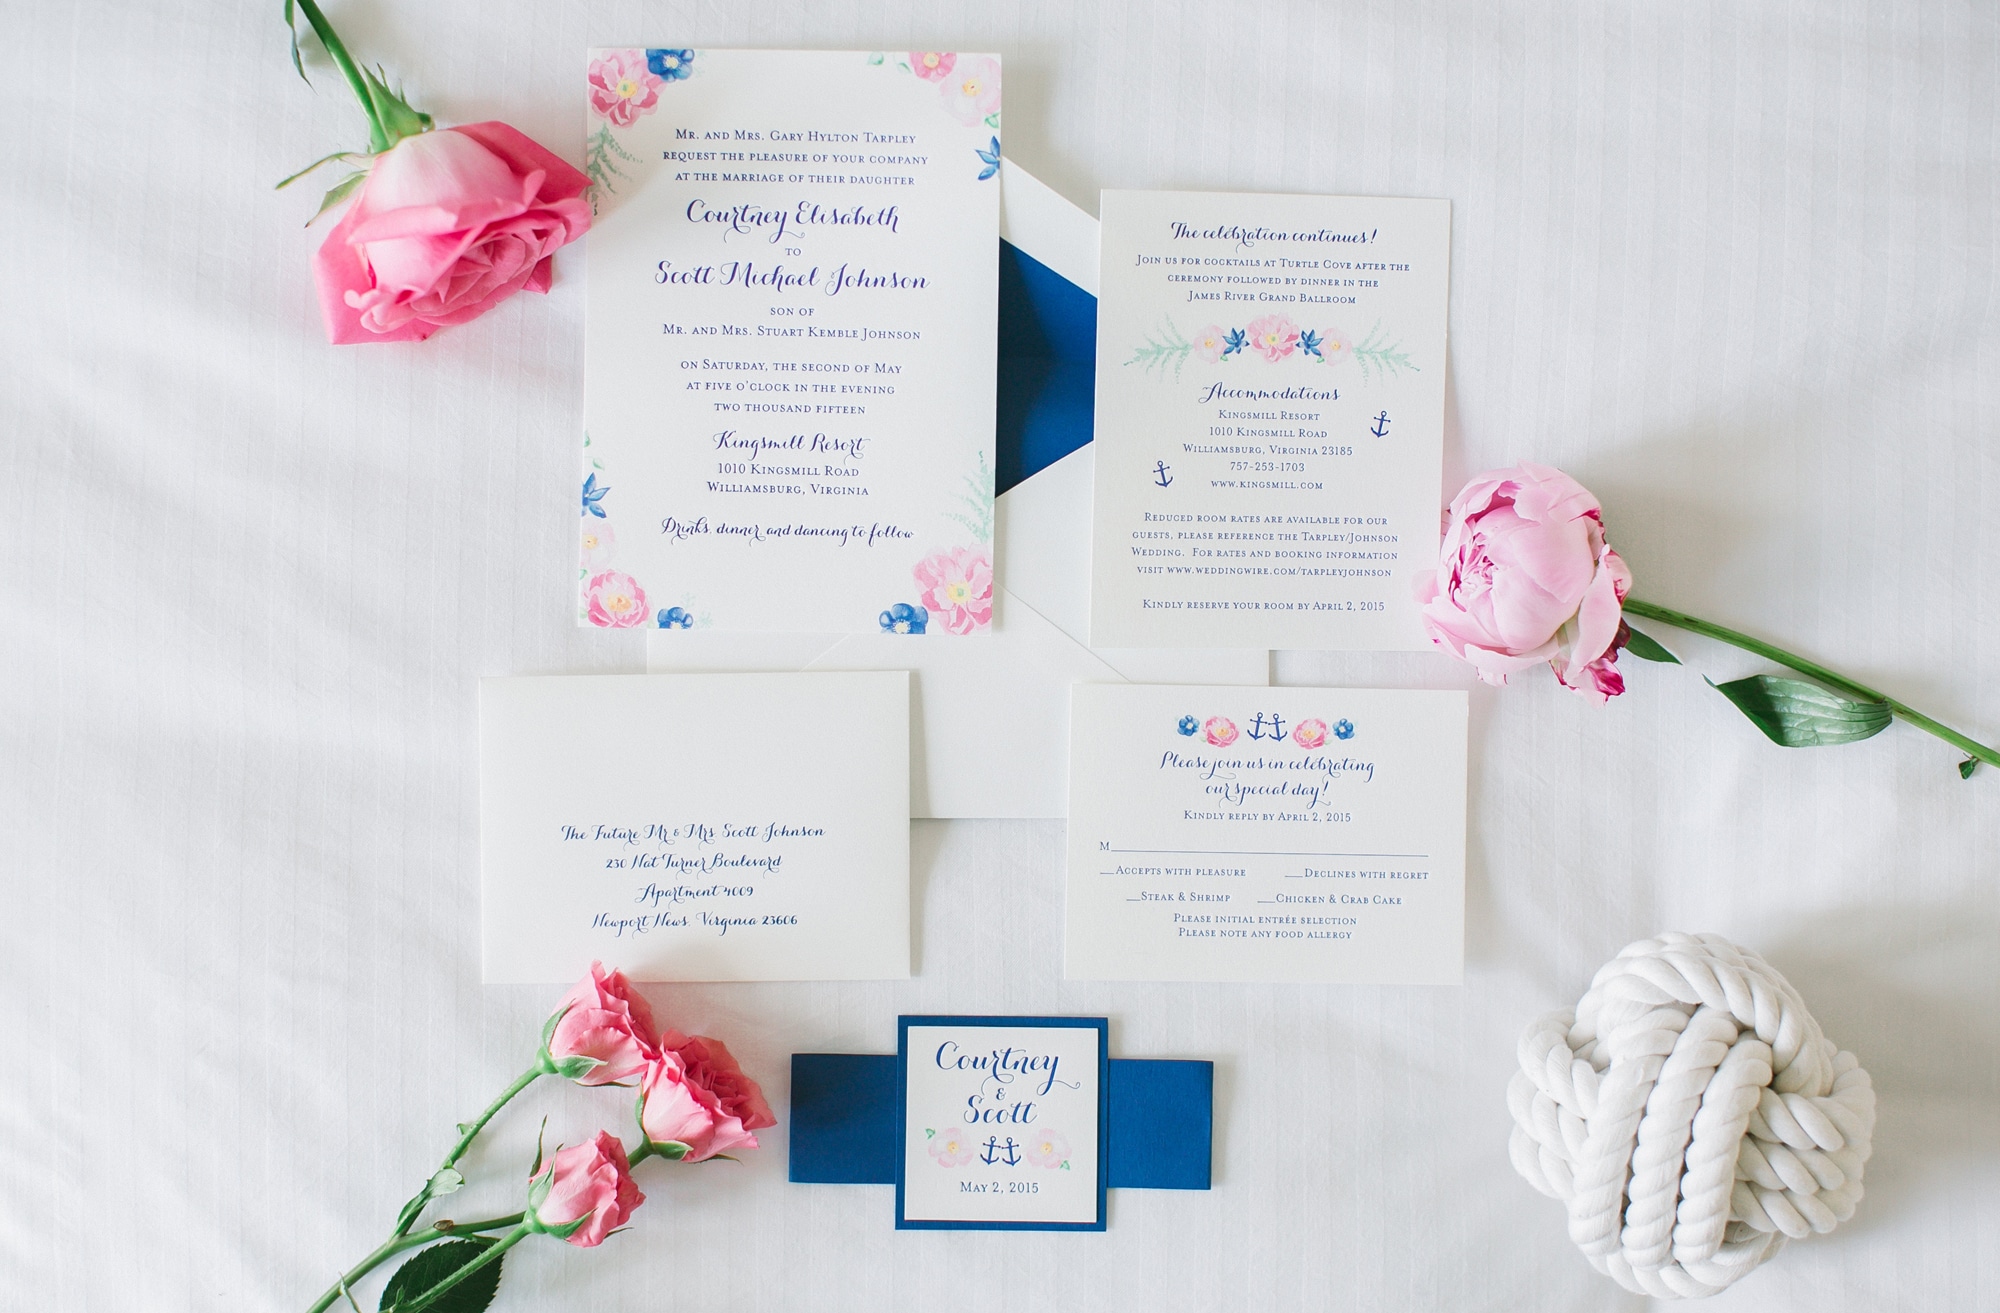 27 Sea-worthy Nautical Wedding Invitations. Custom hand-painted nautical letterpress and floral wedding invitation design by Mospens Studio.